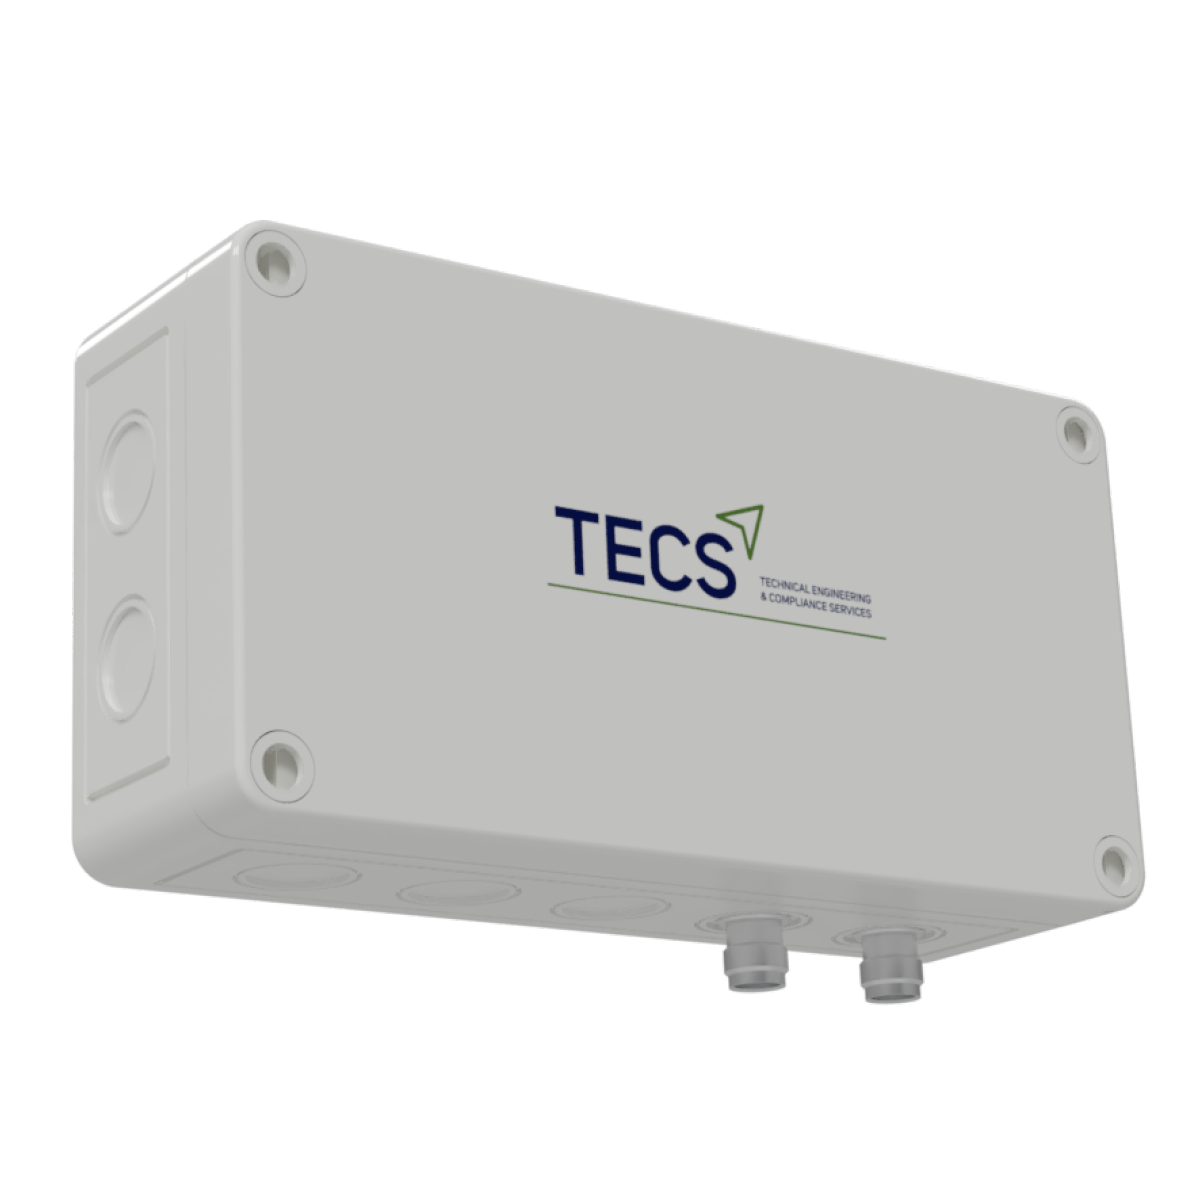 Tecs - Remote Monitoring Access hardware